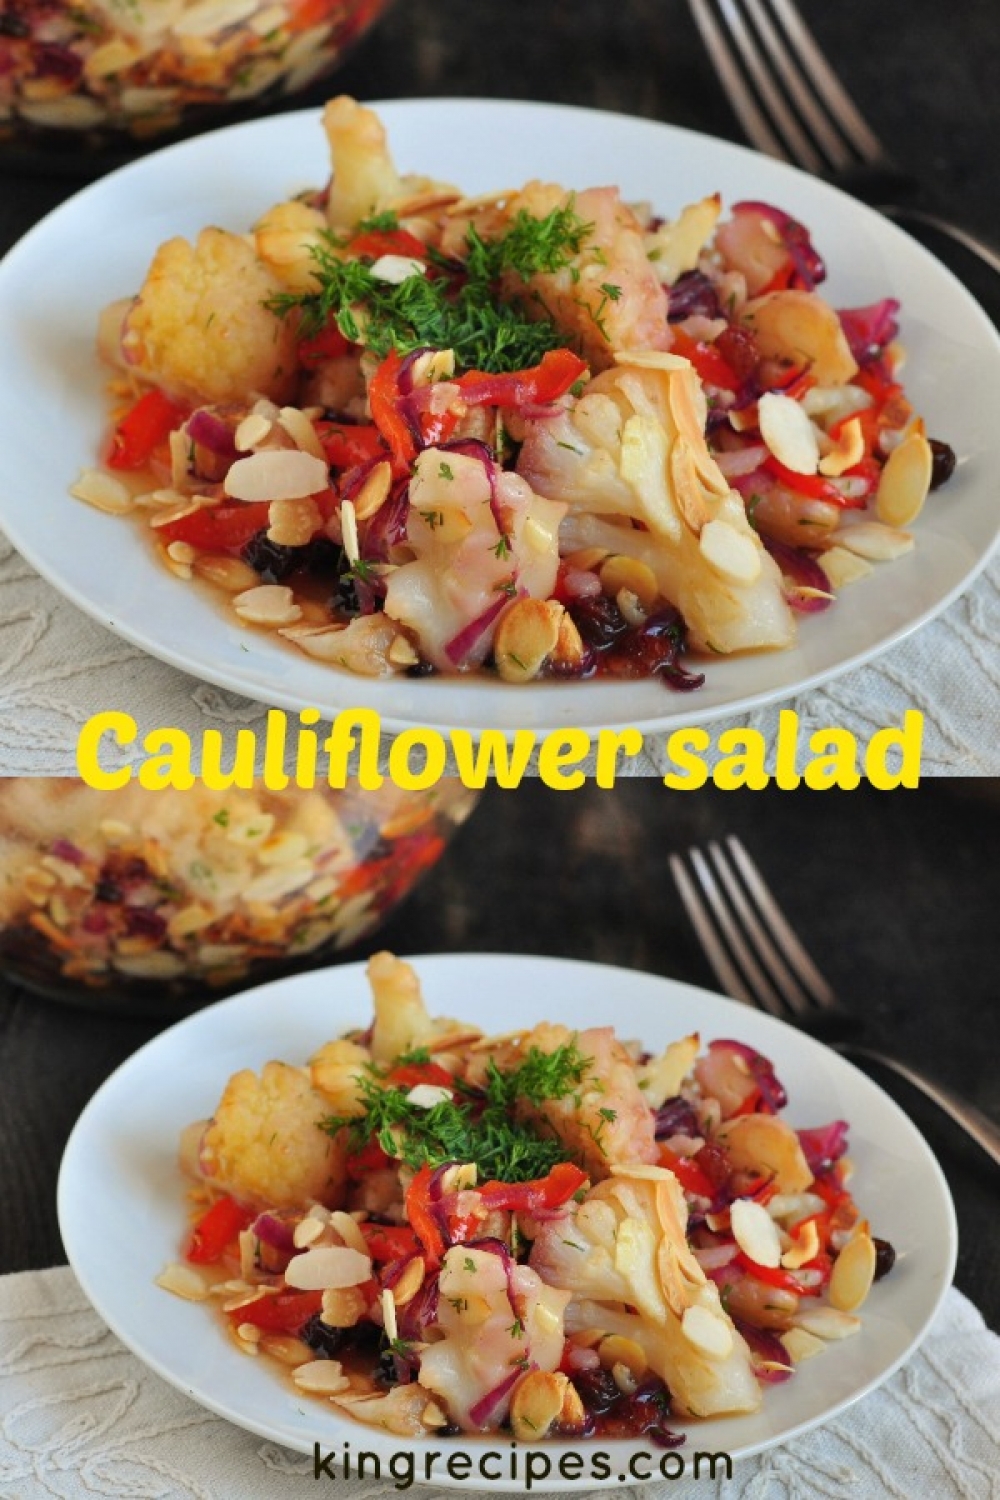 Cauliflower salad